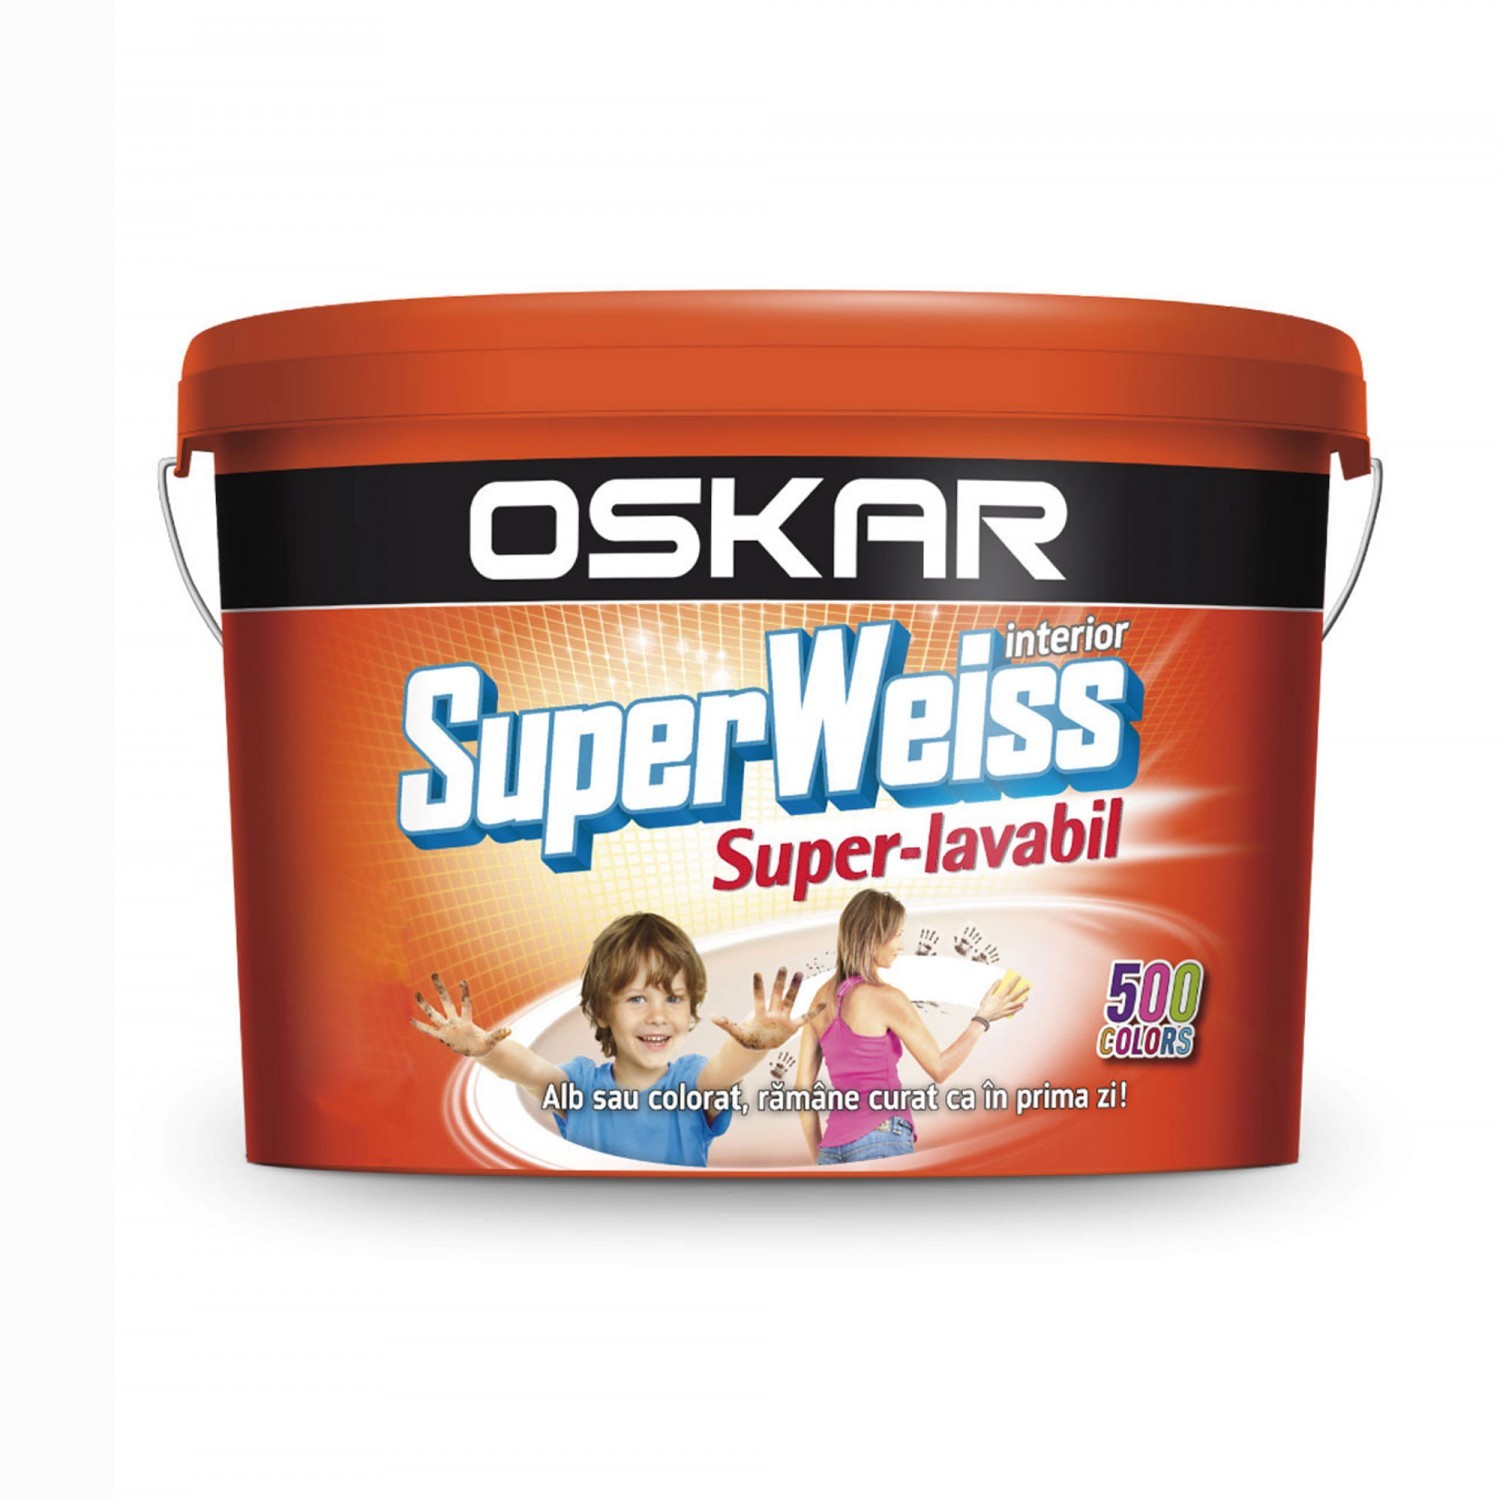 Vopsea lavabila pentru interior Oskar Superweiss 8.5 L oskar